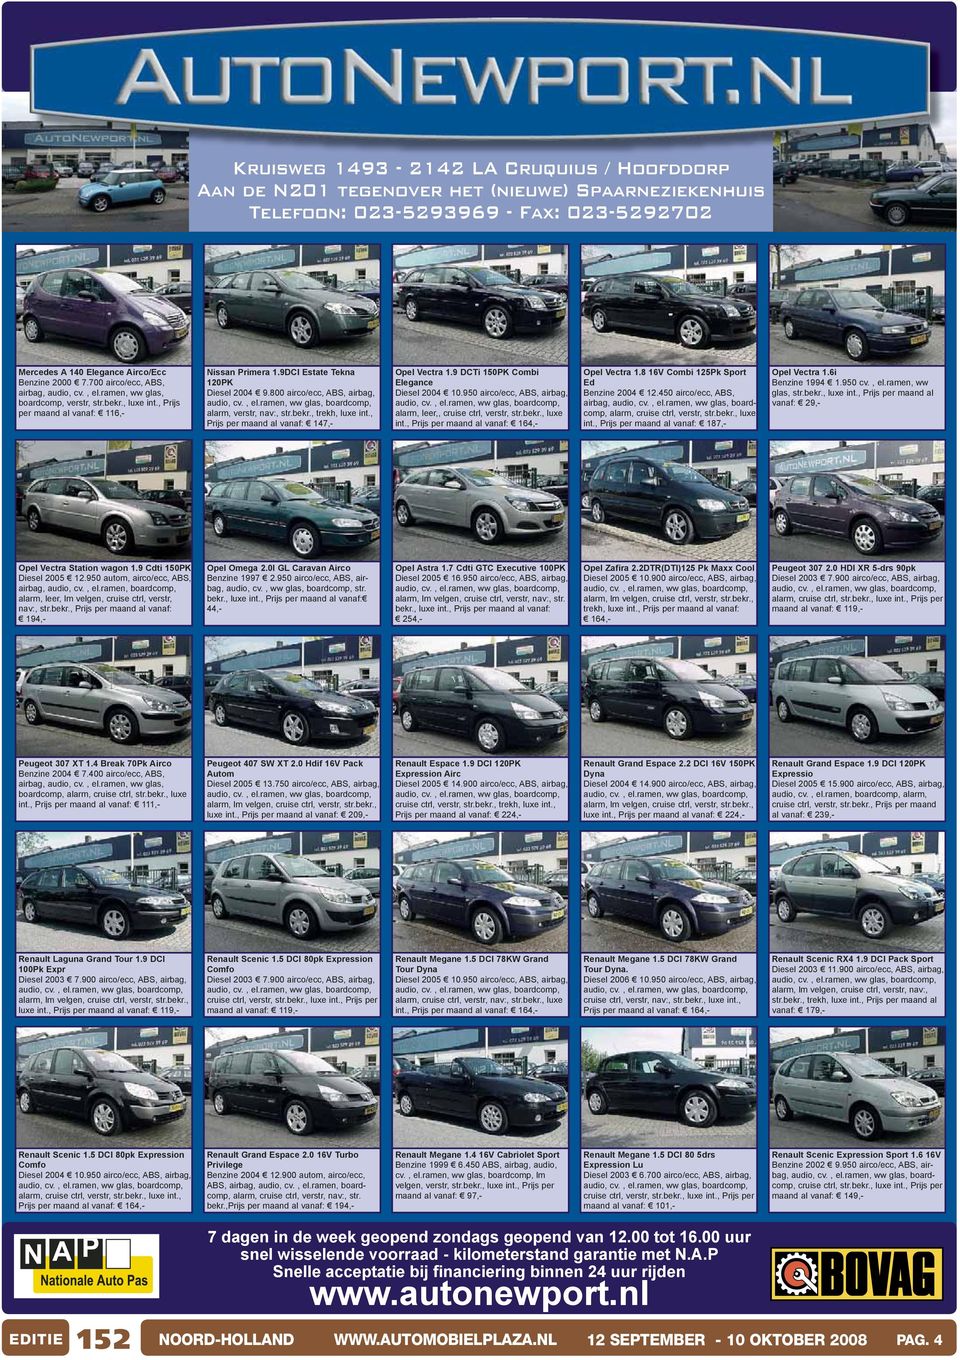 800 airco/ecc, ABS, airbag, alarm, verstr, nav:, str.bekr., trekh, luxe int., Prijs per maand al vanaf: 147,- Opel Vectra 1.9 DCTi 150PK Combi Elegance Diesel 2004 10.